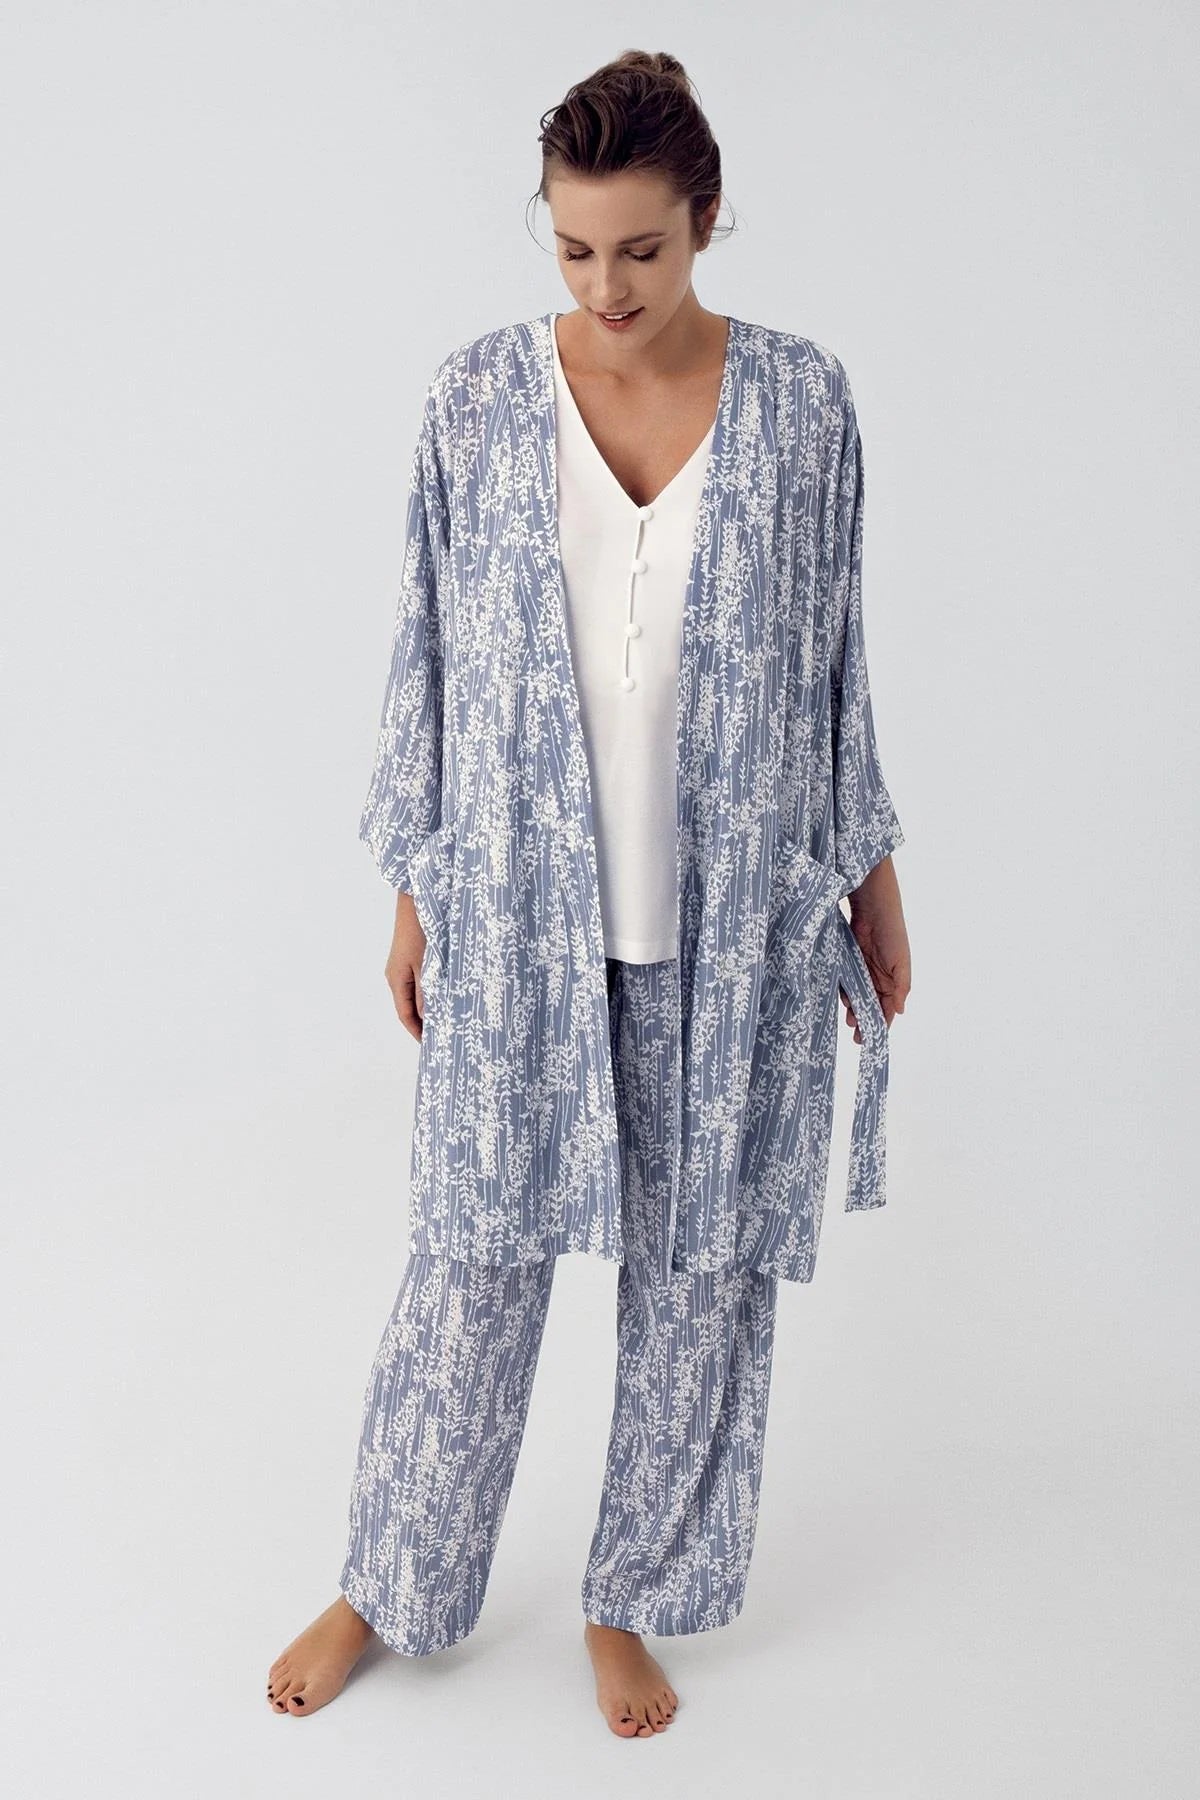 Shopymommy 16300 3-Pieces Maternity & Nursing Pajamas With Patterned Robe Indigo